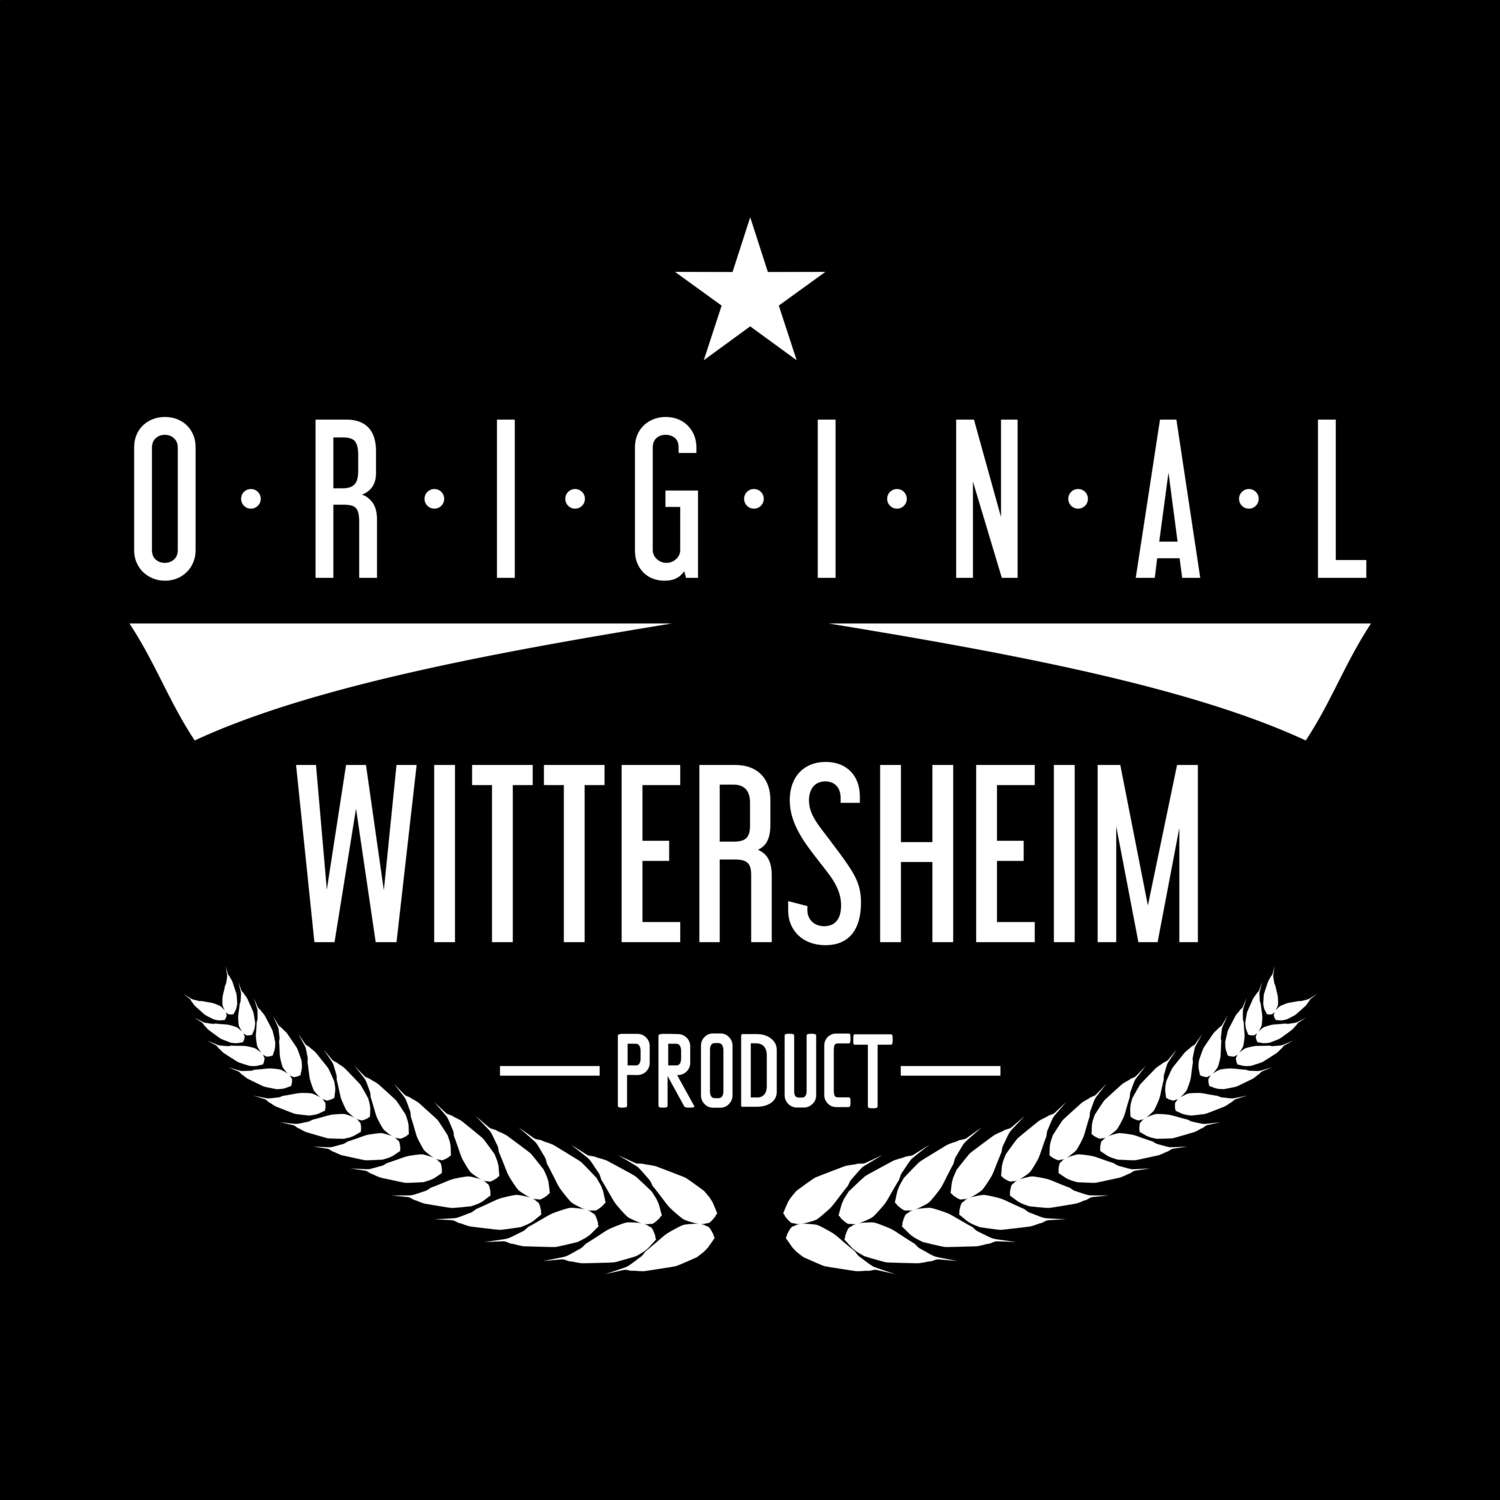 Wittersheim T-Shirt »Original Product«